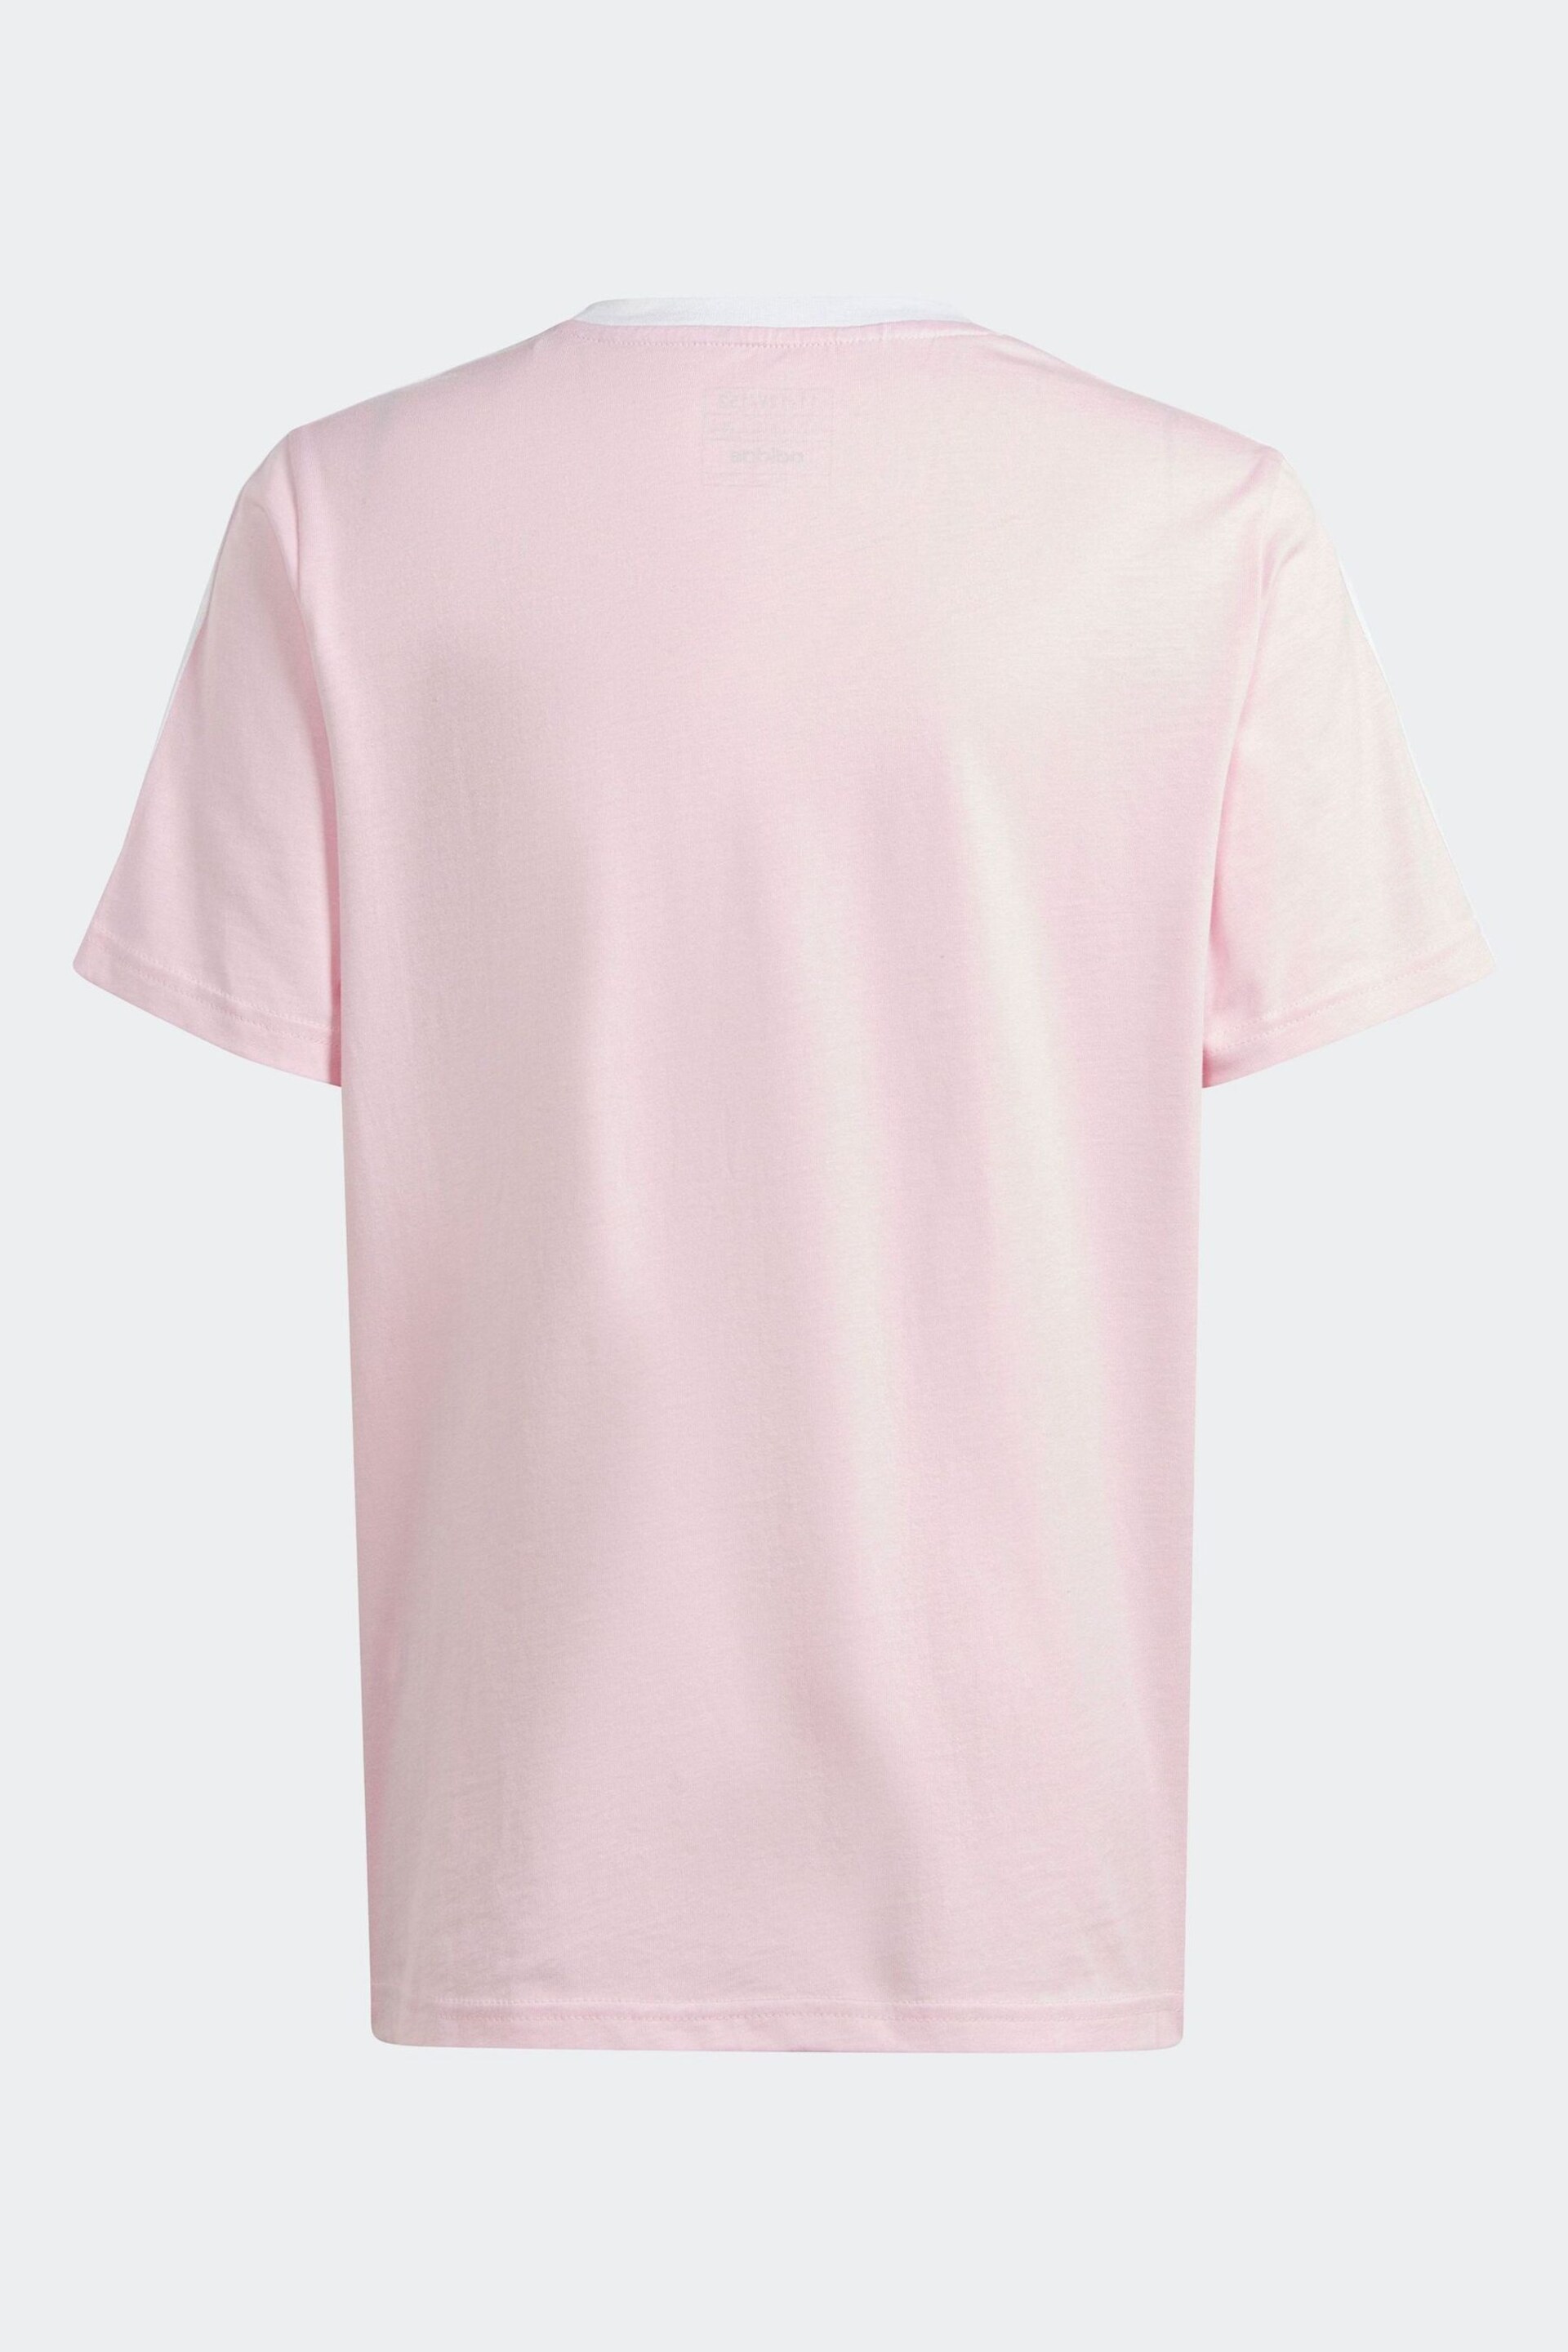 adidas Pink 3-Stripe Essential Boyfriend Fit T-Shirt - Image 12 of 15